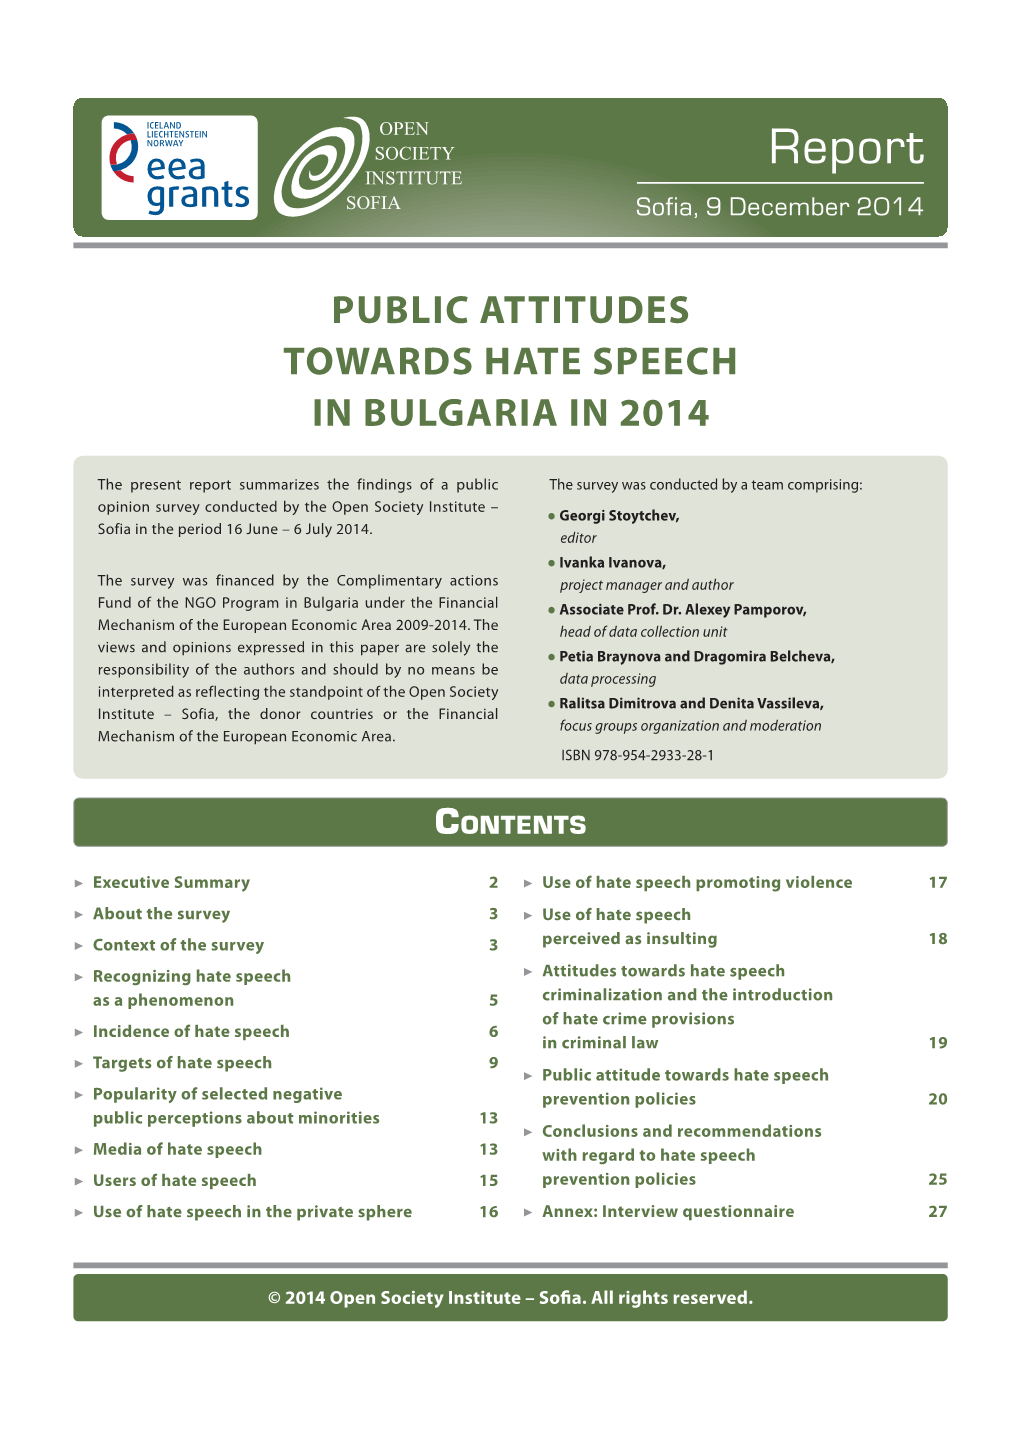 Public Attitudes Towards Hate Speech in Bulgaria in 2014